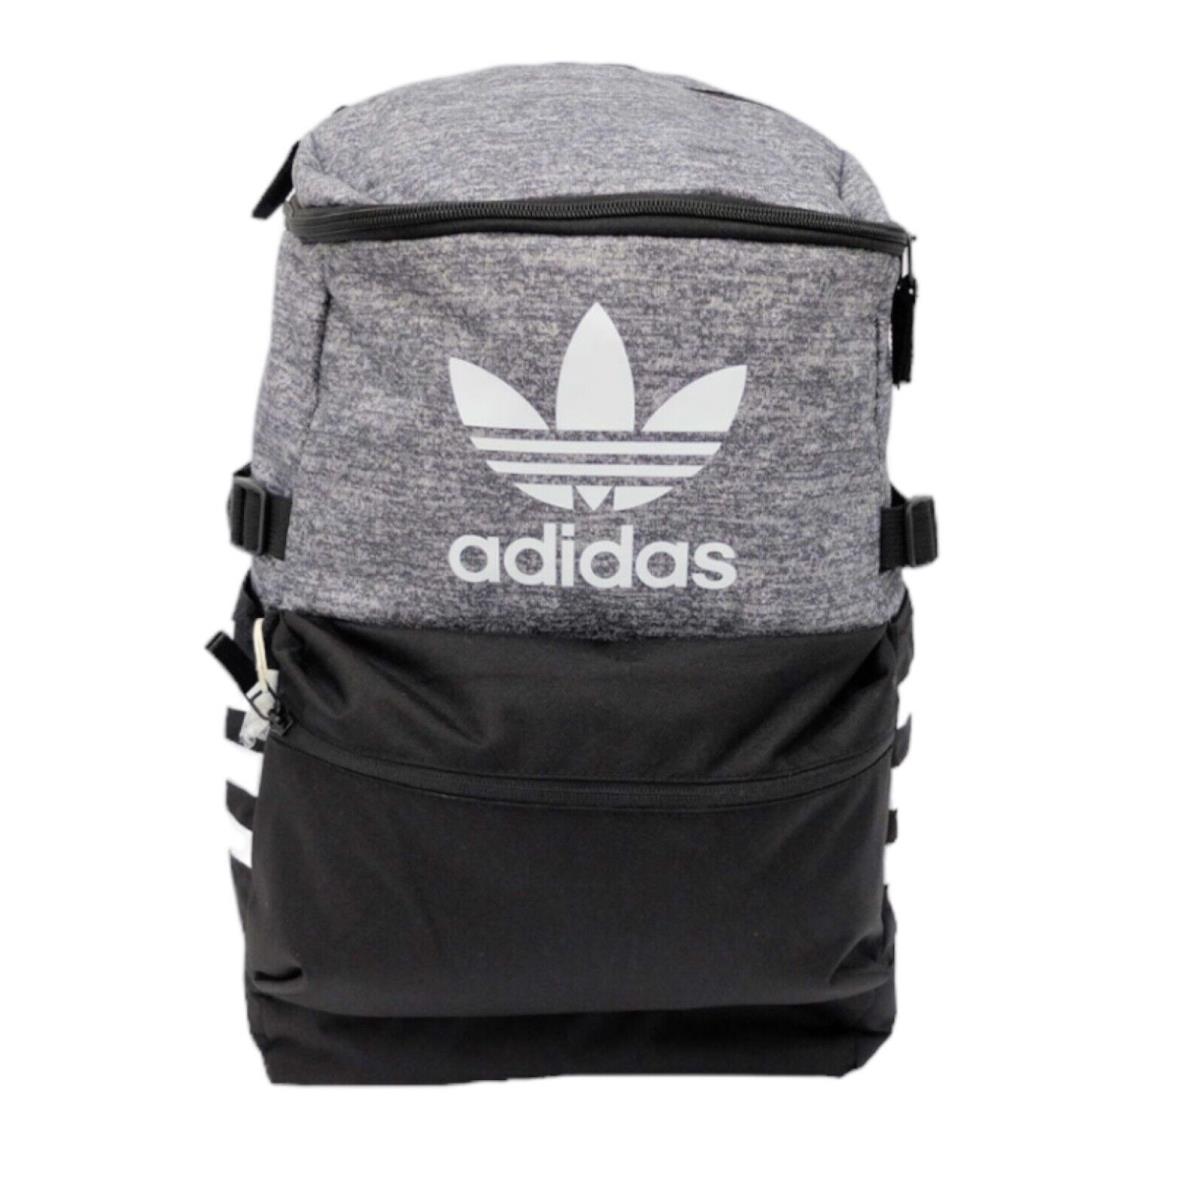 Adidas Ori Classic Zip Top Backpack Black and Grey -book Bag